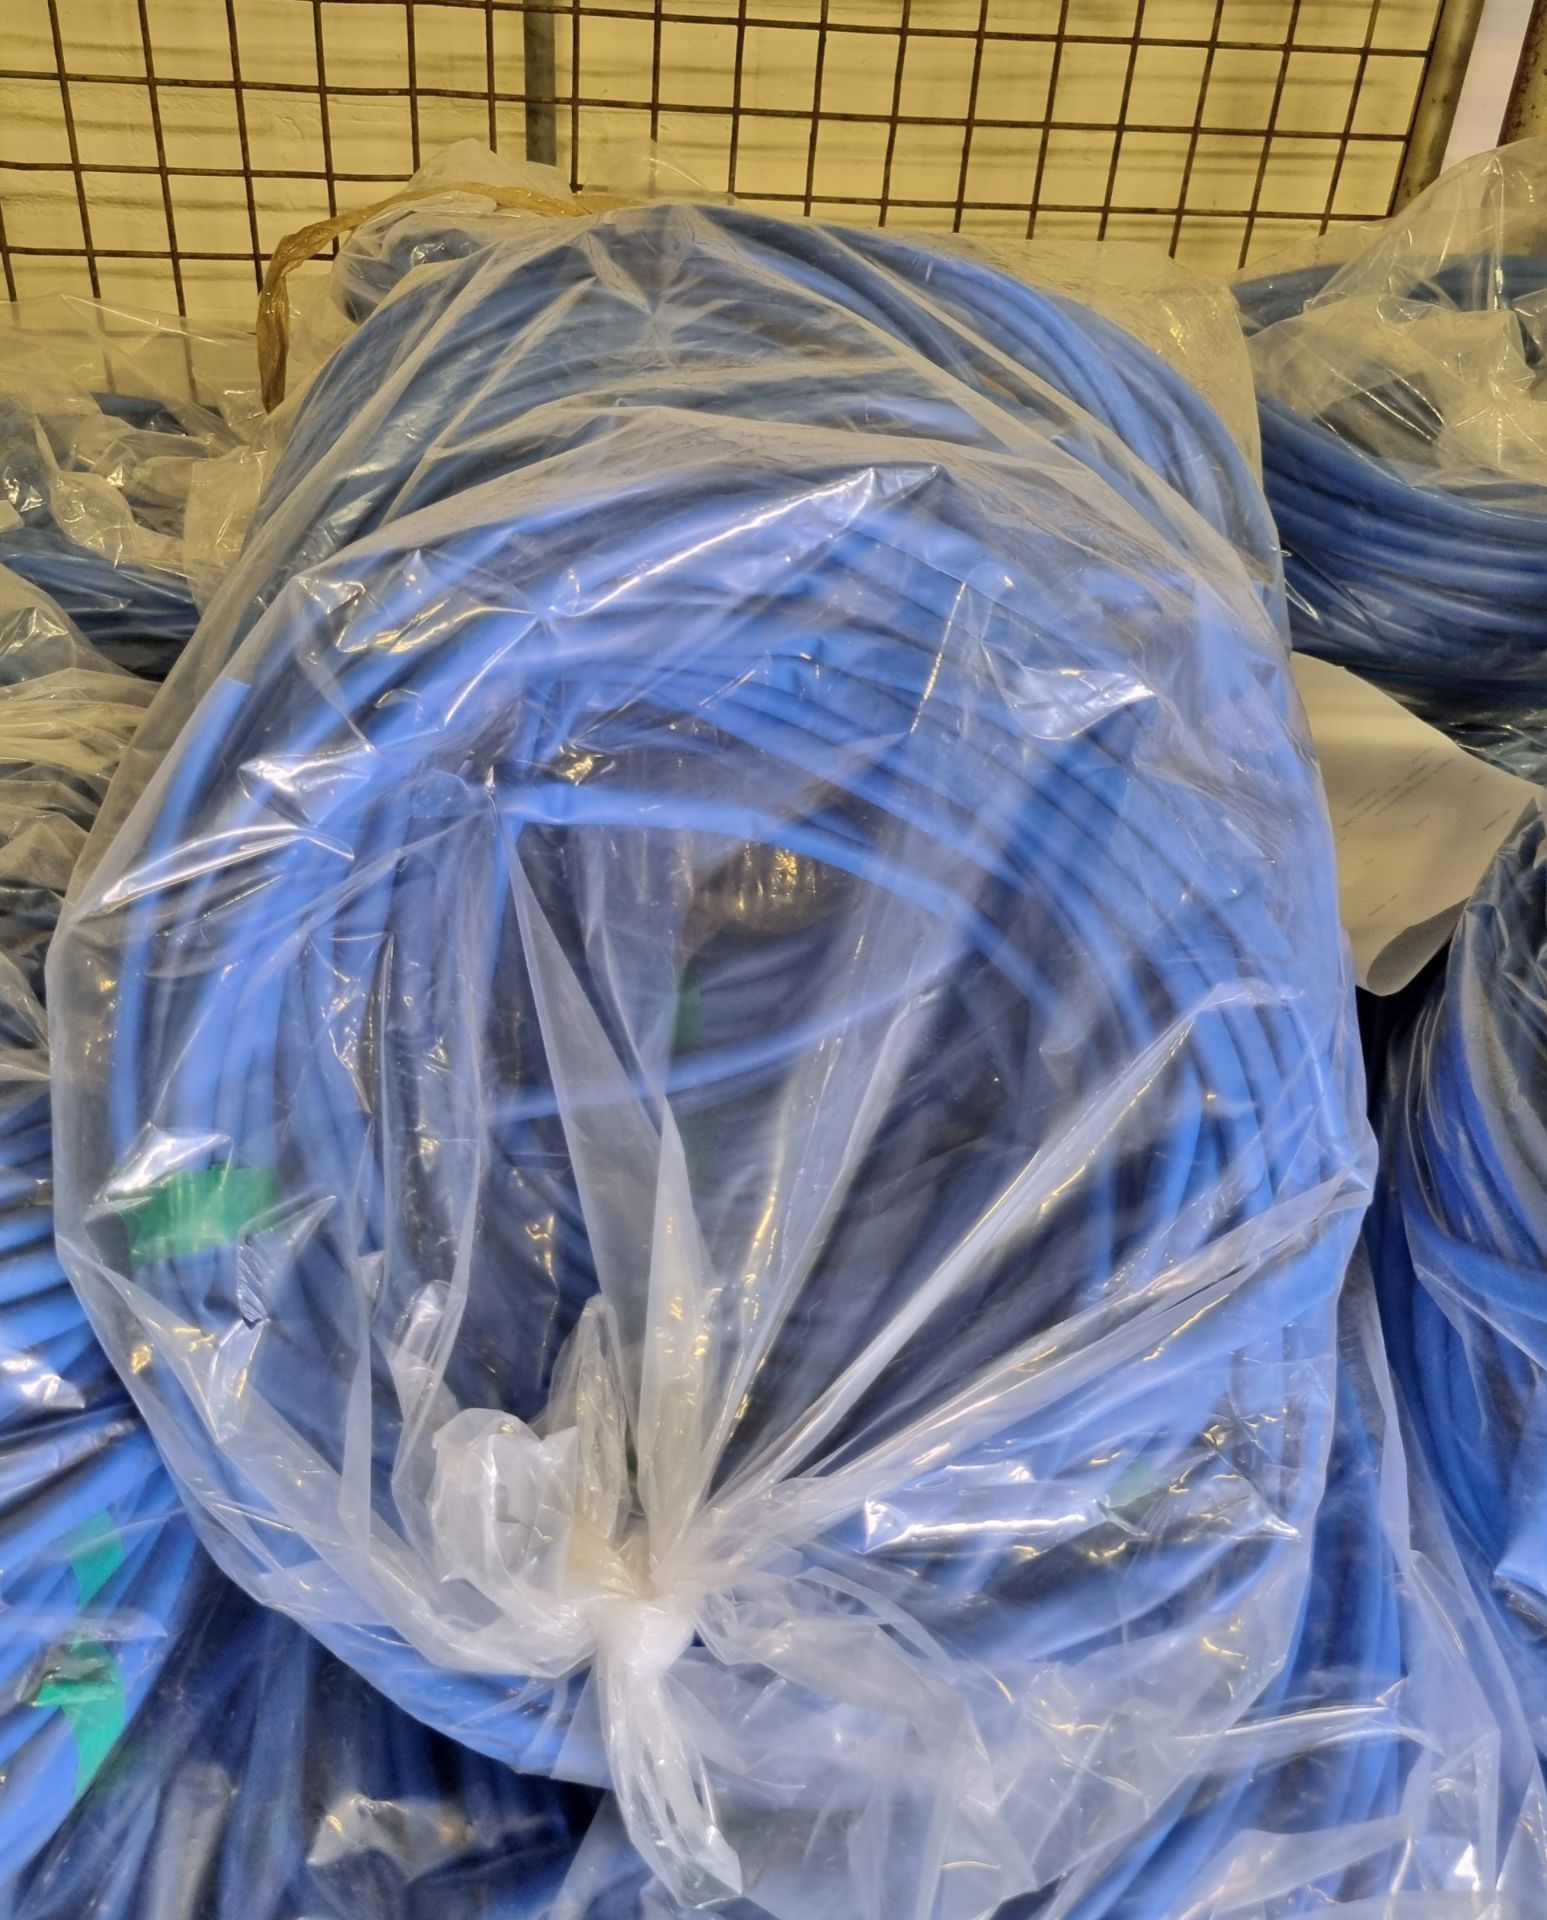 12x packs of blue 12mm x 10m PVC insulator sheath sleeves - 12 sleeves per pack - Image 3 of 3